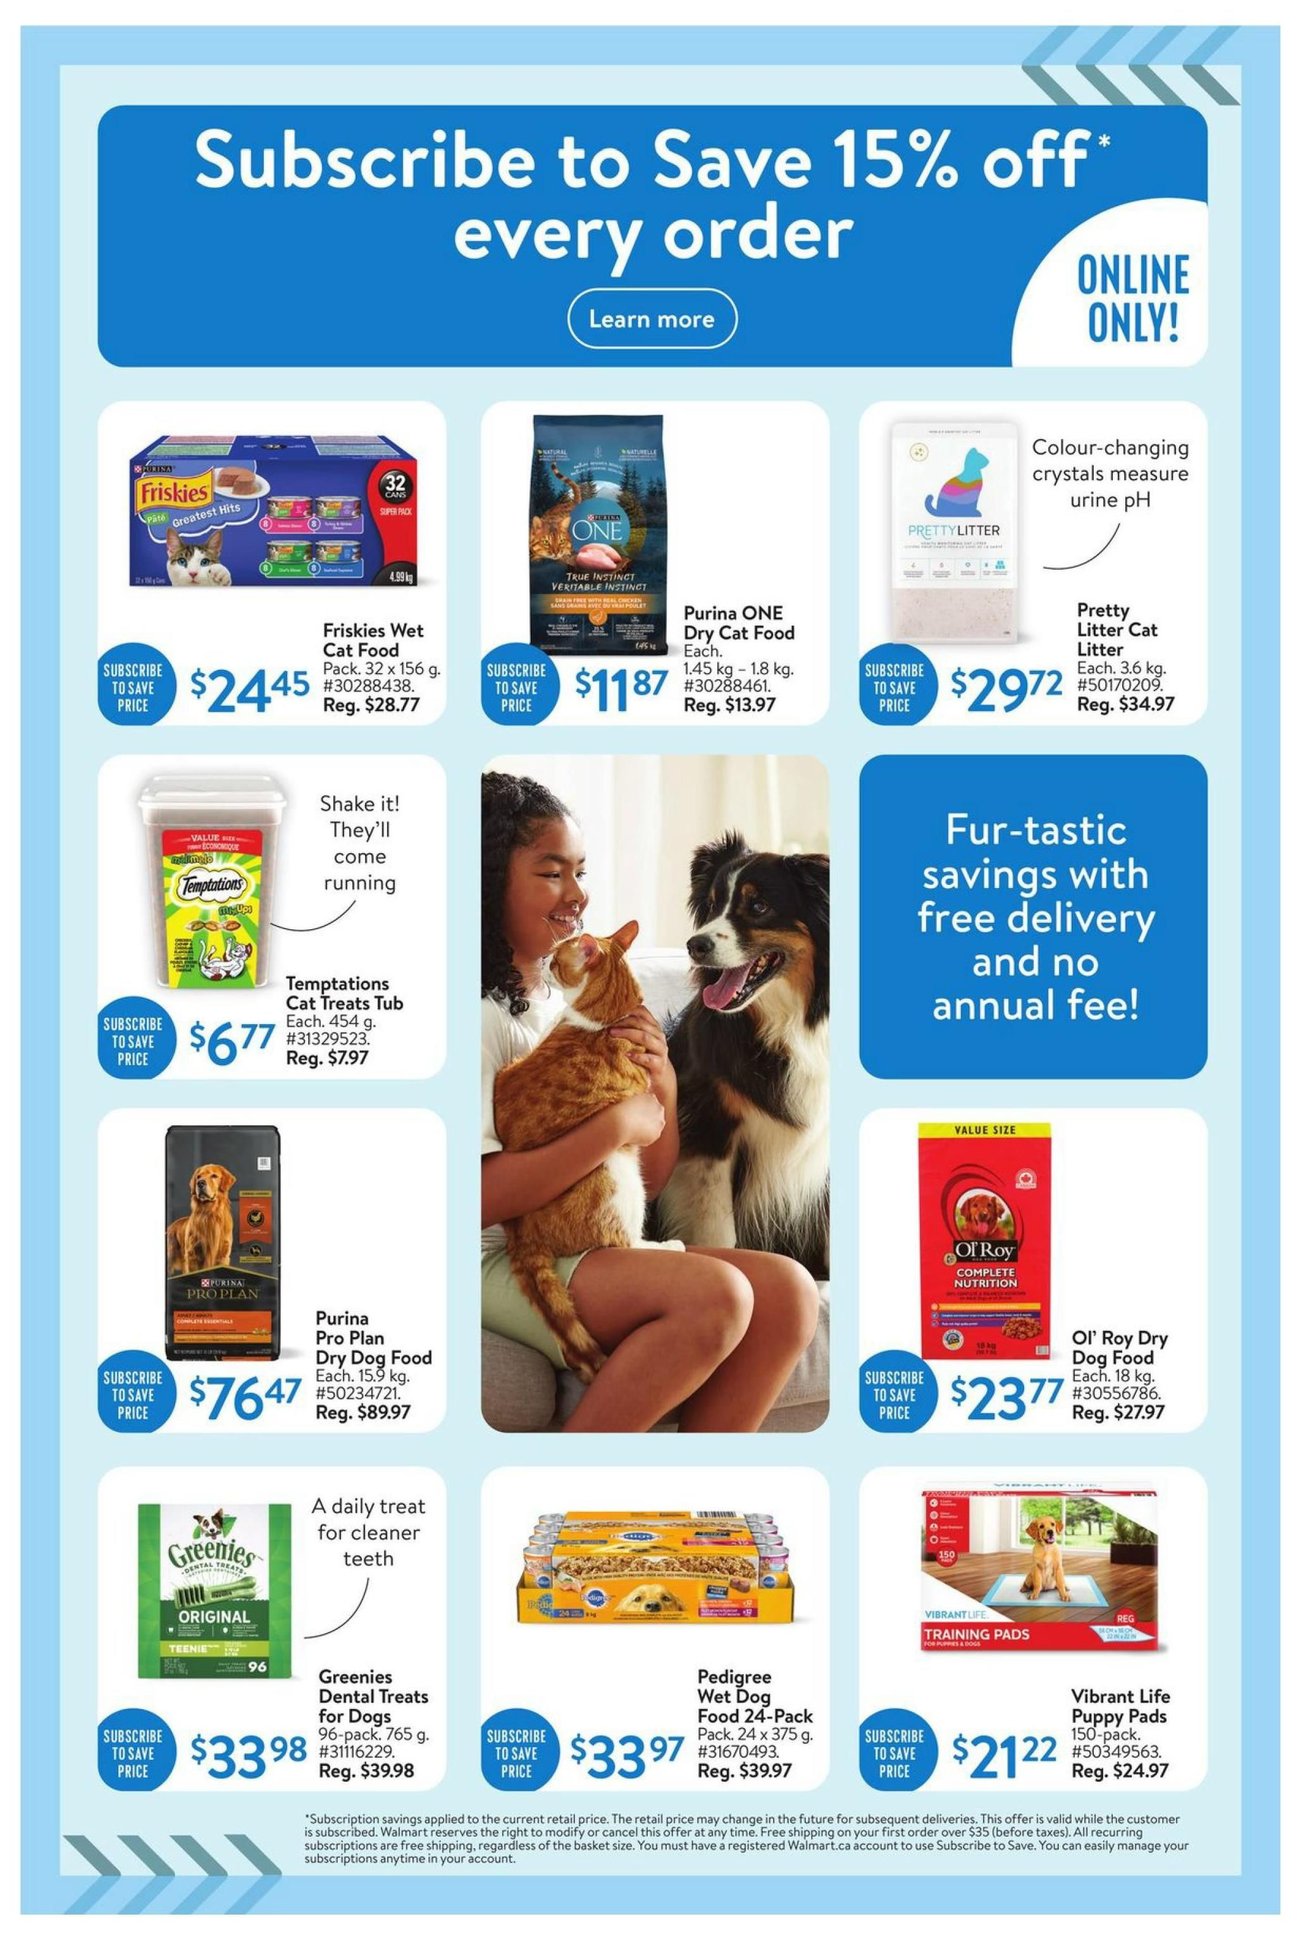 Walmart Canada - Pet Month Specials - Page 2